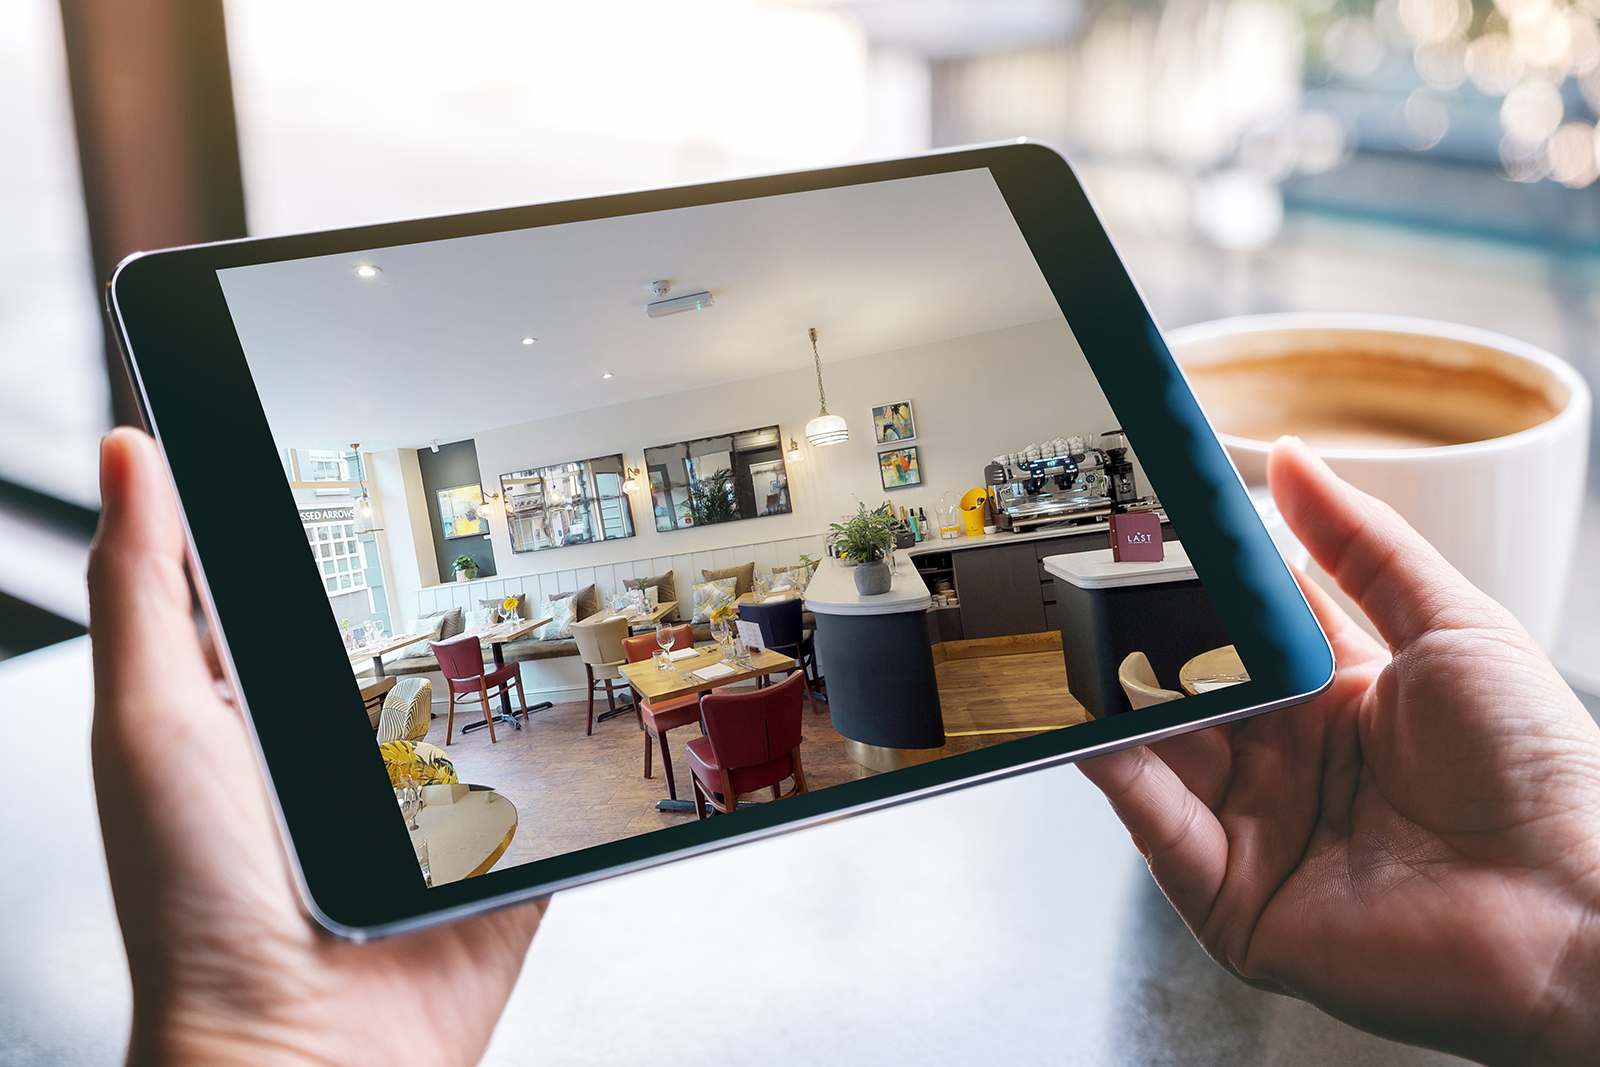 Vortex Visual restaurant 360 virtual tour on tablet